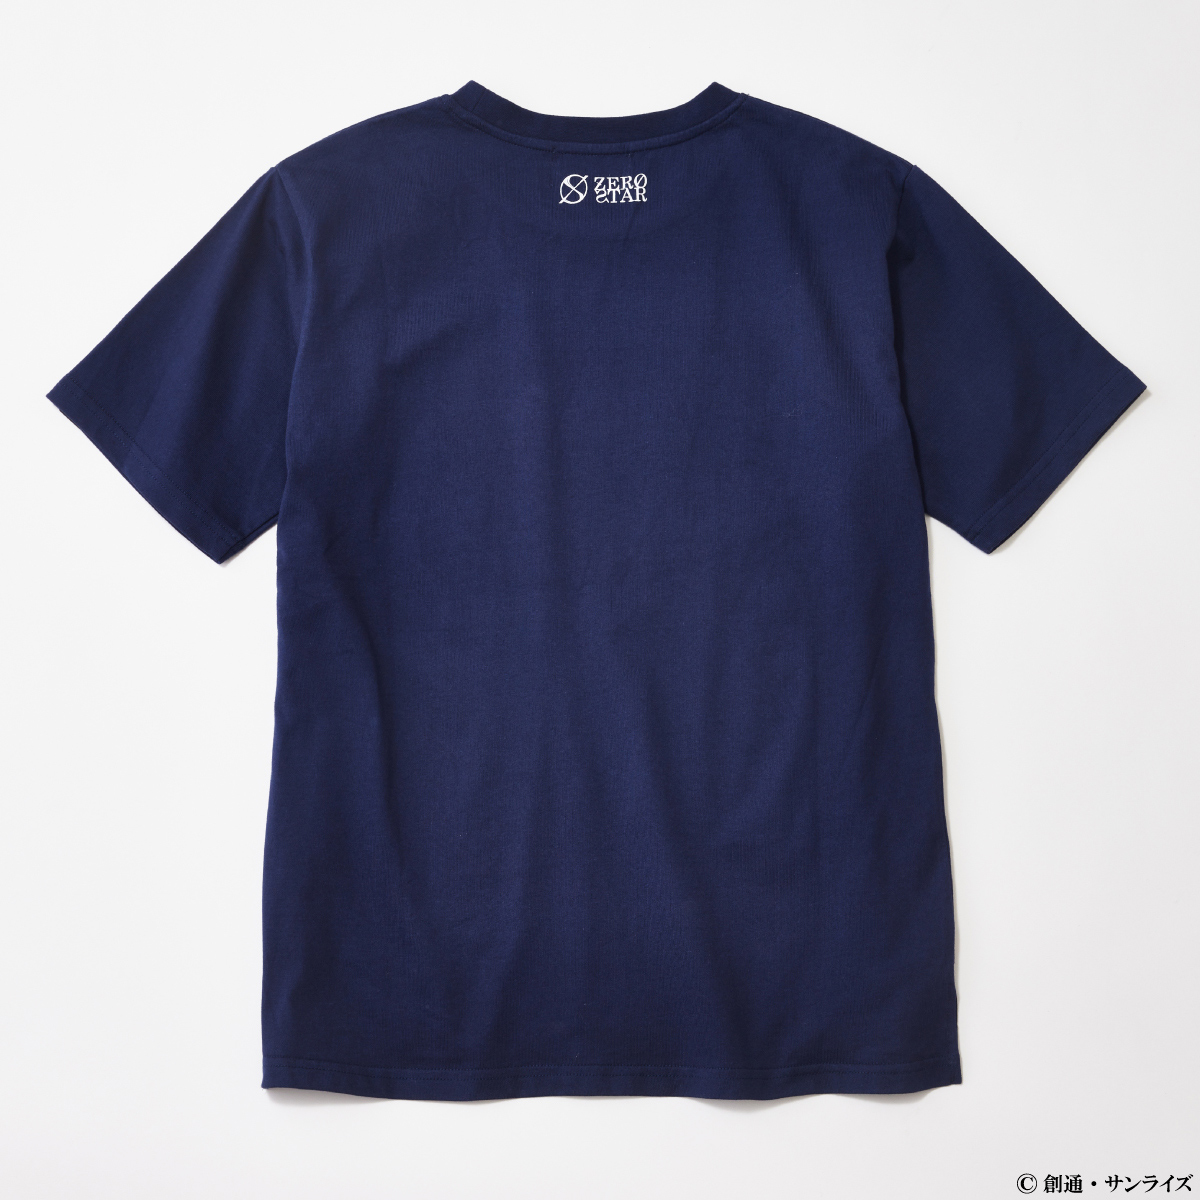 STRICT-G ZERO STAR『機動戦士ガンダム』Tシャツ AMURO